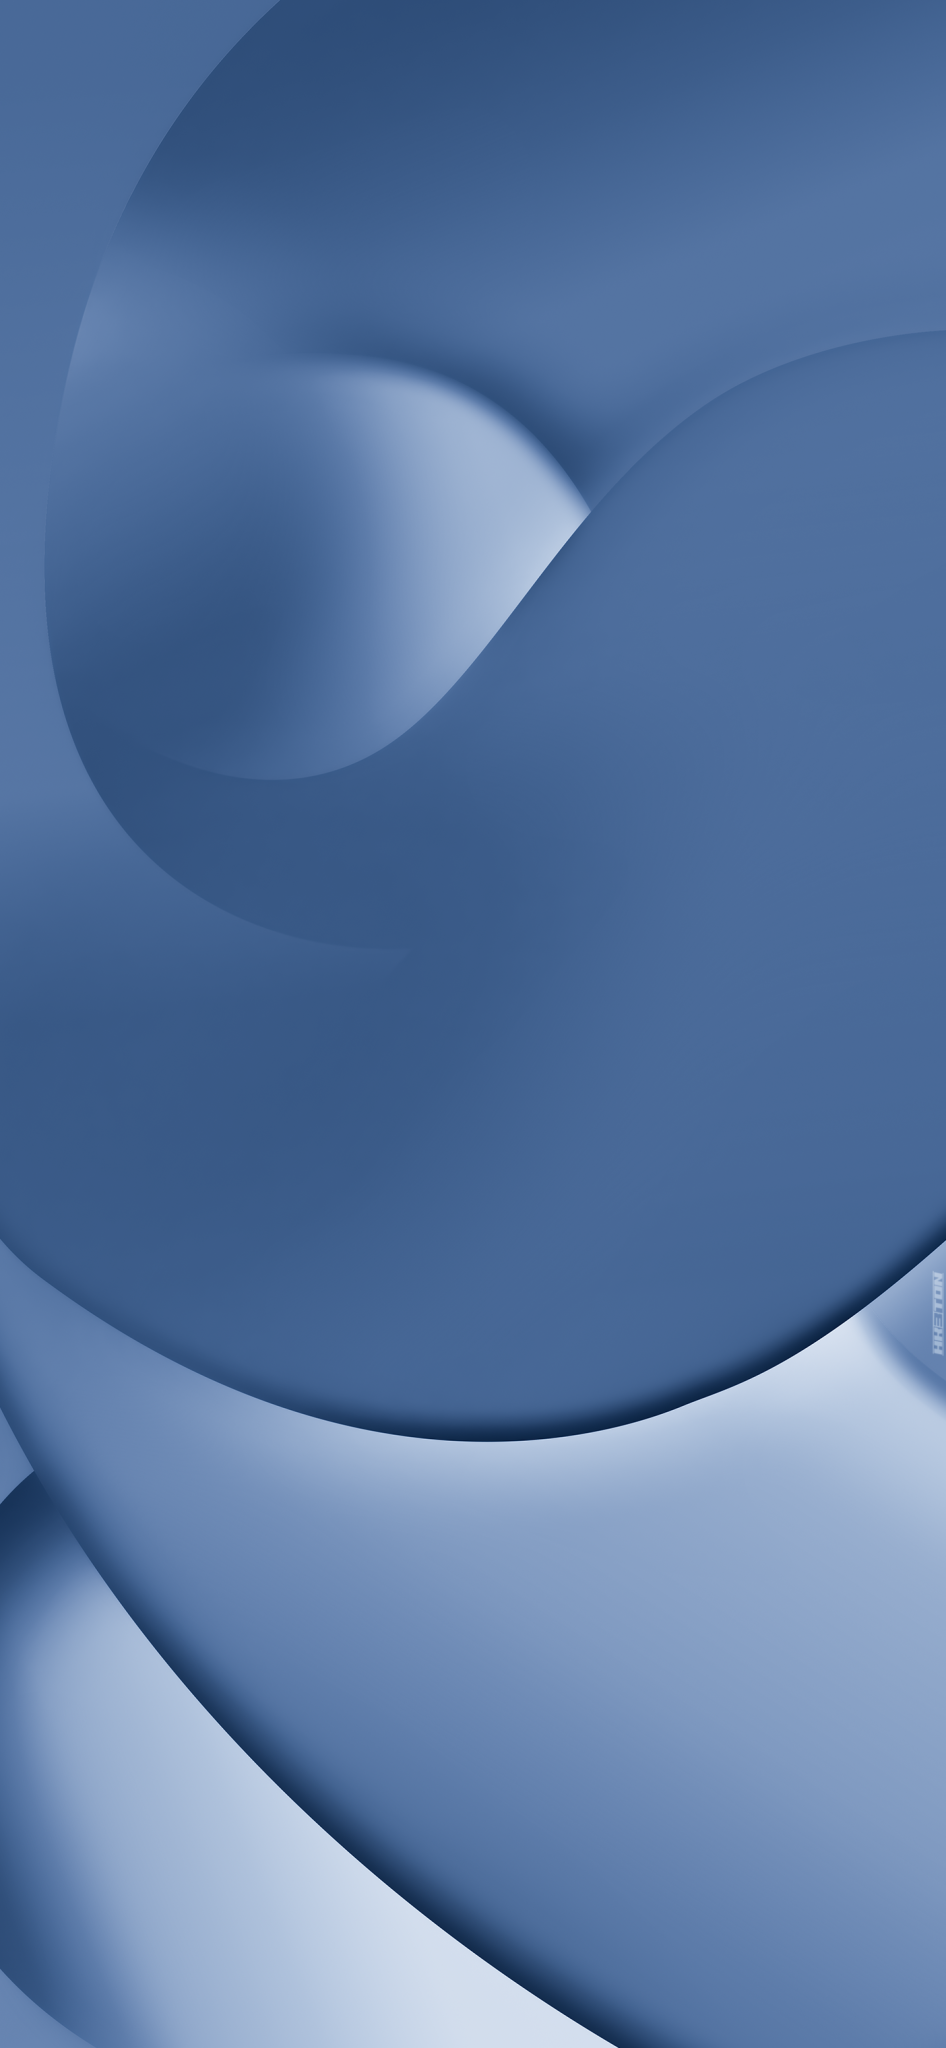 iOS 157 deep gray and blue – by Hk3ToN | Zollotech